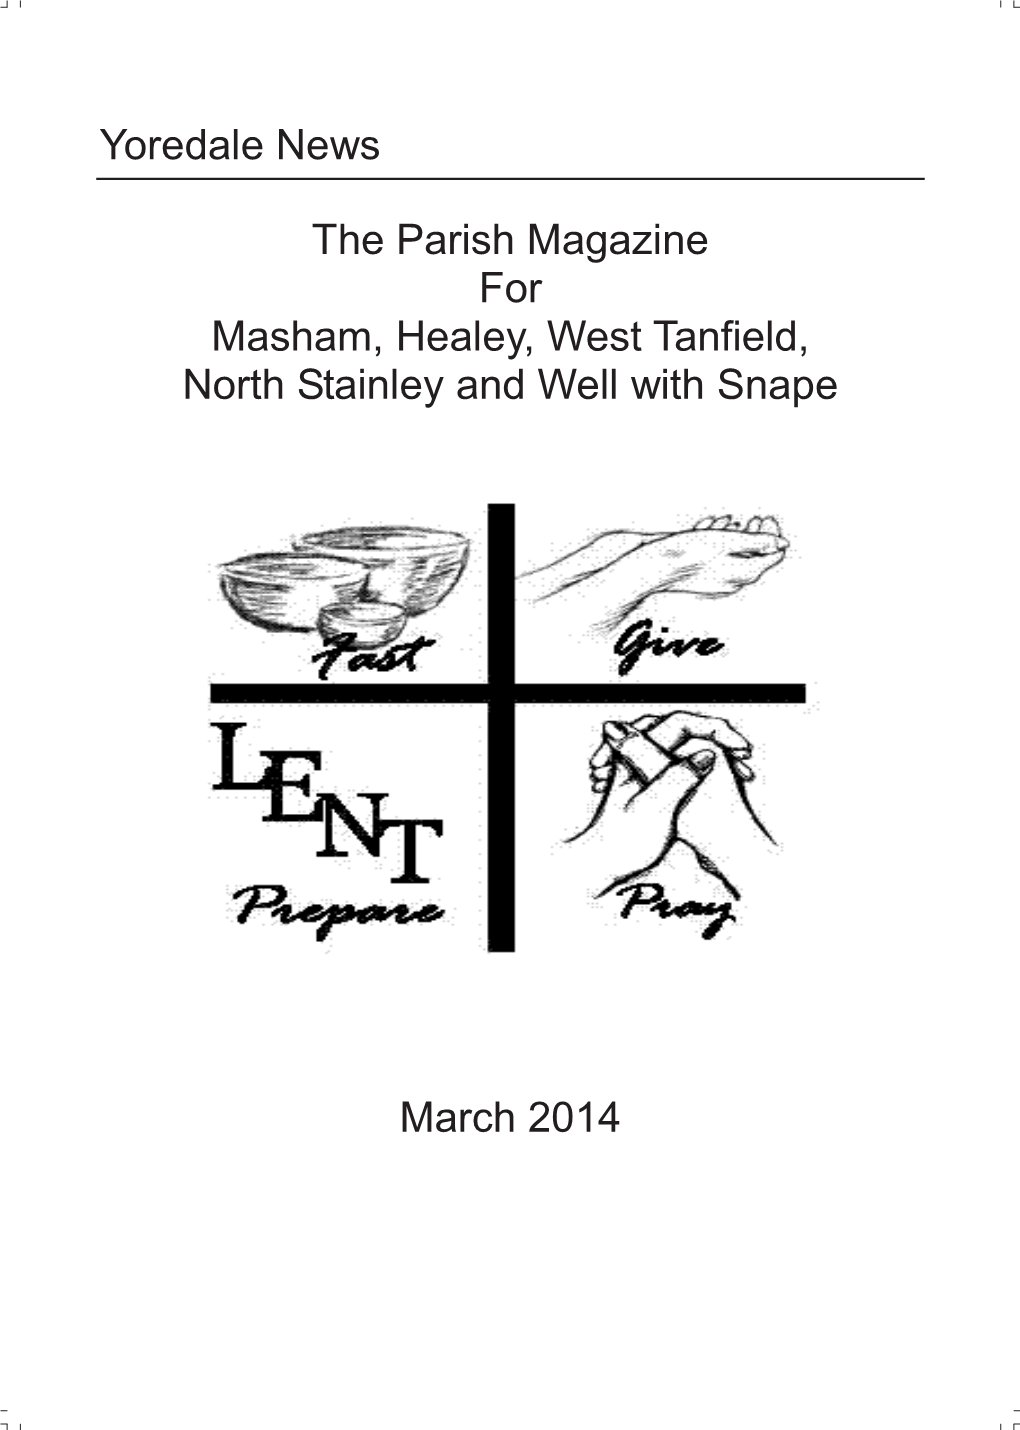 Yoredale News the Parish Magazine for Masham, Healey, West Tanfield